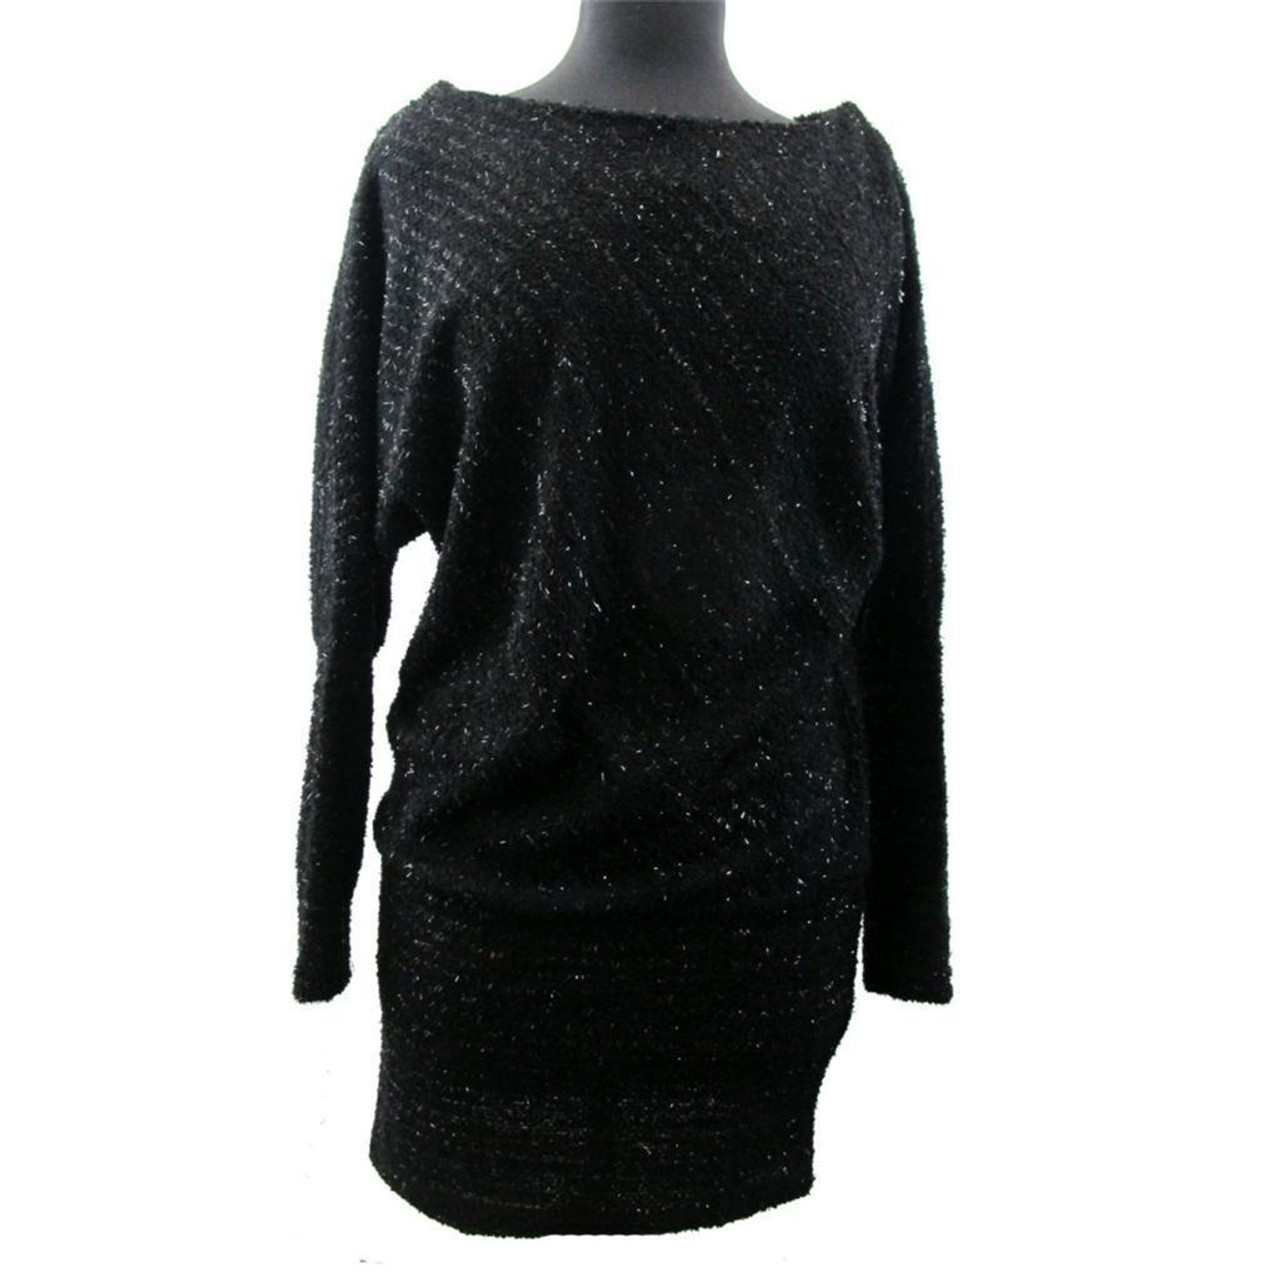 black sparkly tunic dress